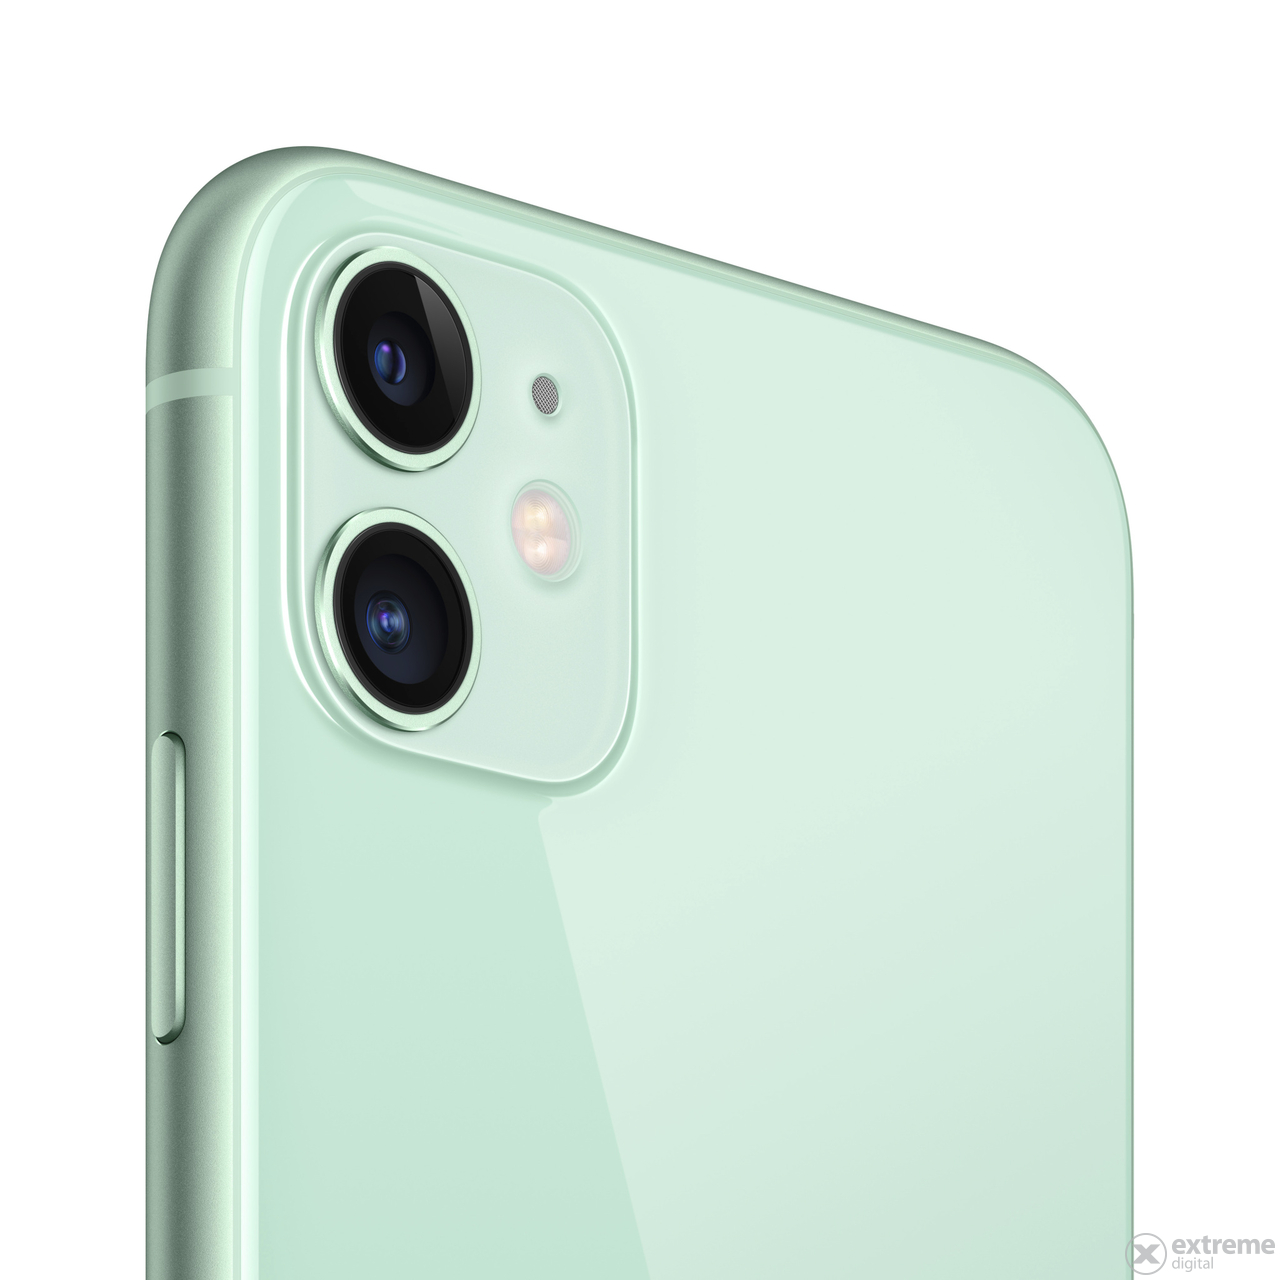 Apple iPhone 11 64GB pametni telefon (mhdg3gh/a), zeleni